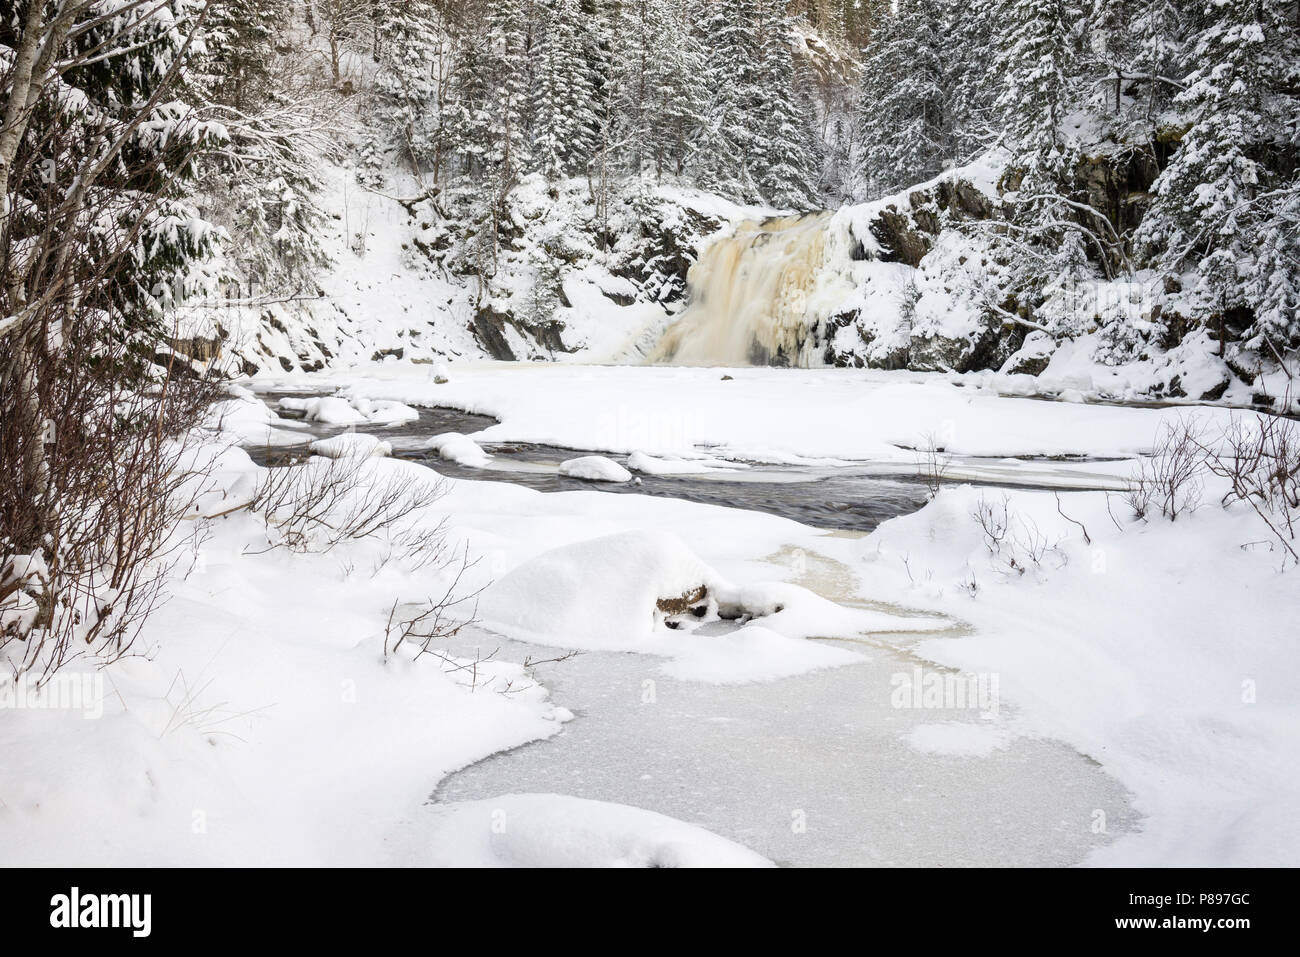 Paysage de neige Norvège avec cascade, sneeuwlandschap Noorwegen rencontré waterval Banque D'Images